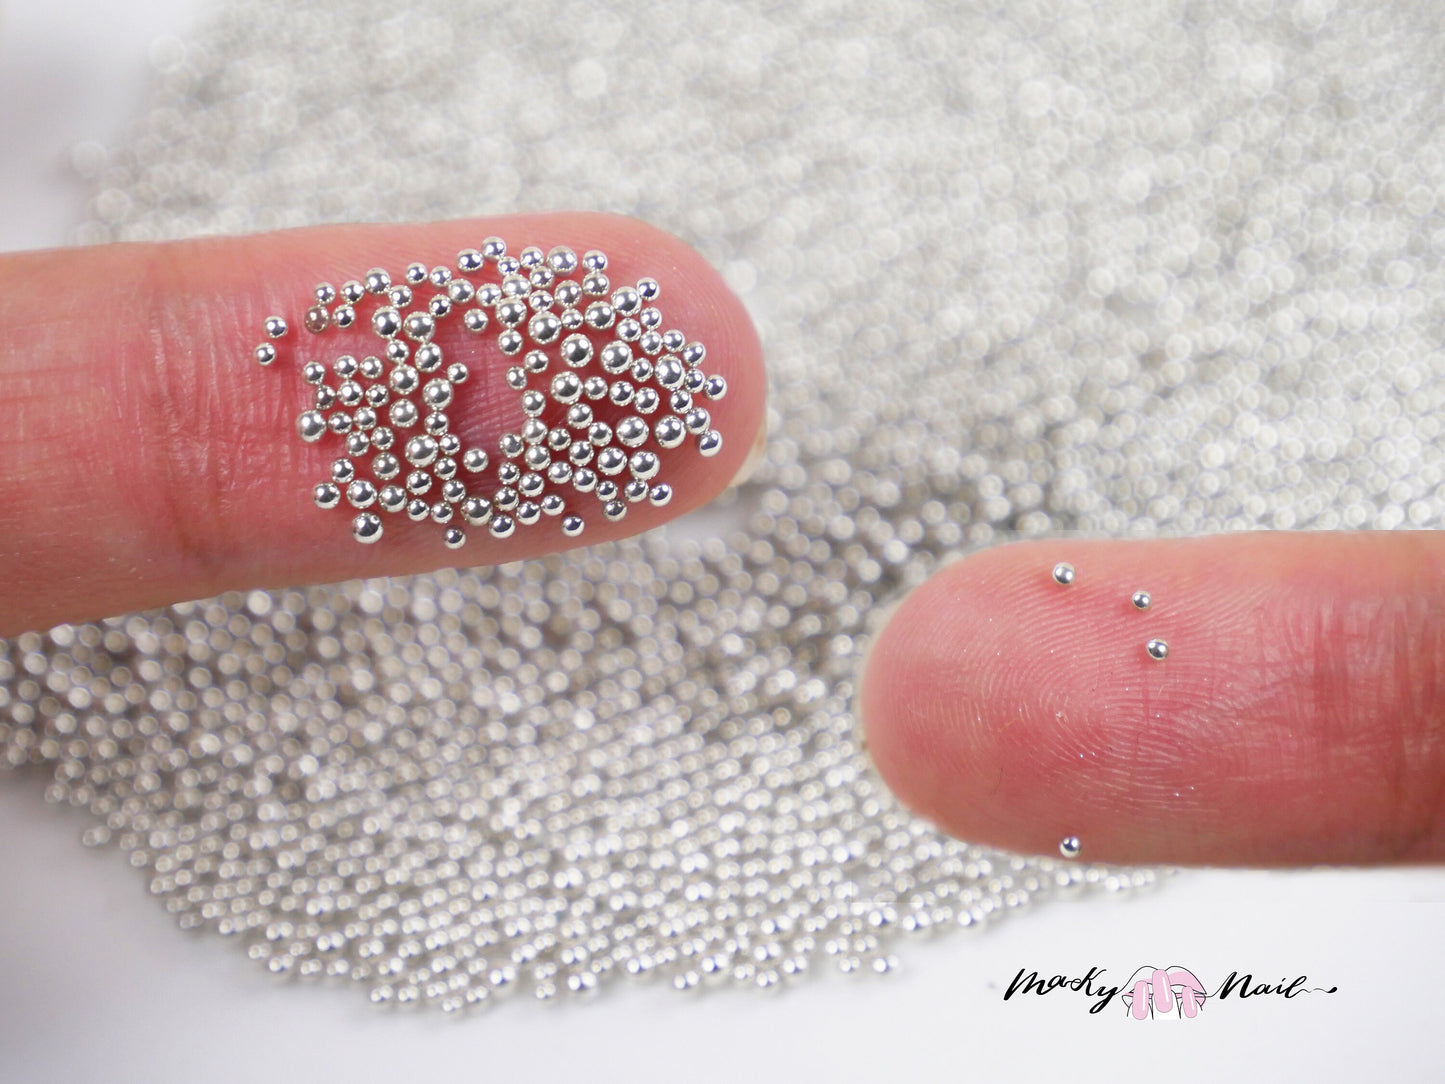 Metallic Caviar beads/ Silver Gold nail micro beads